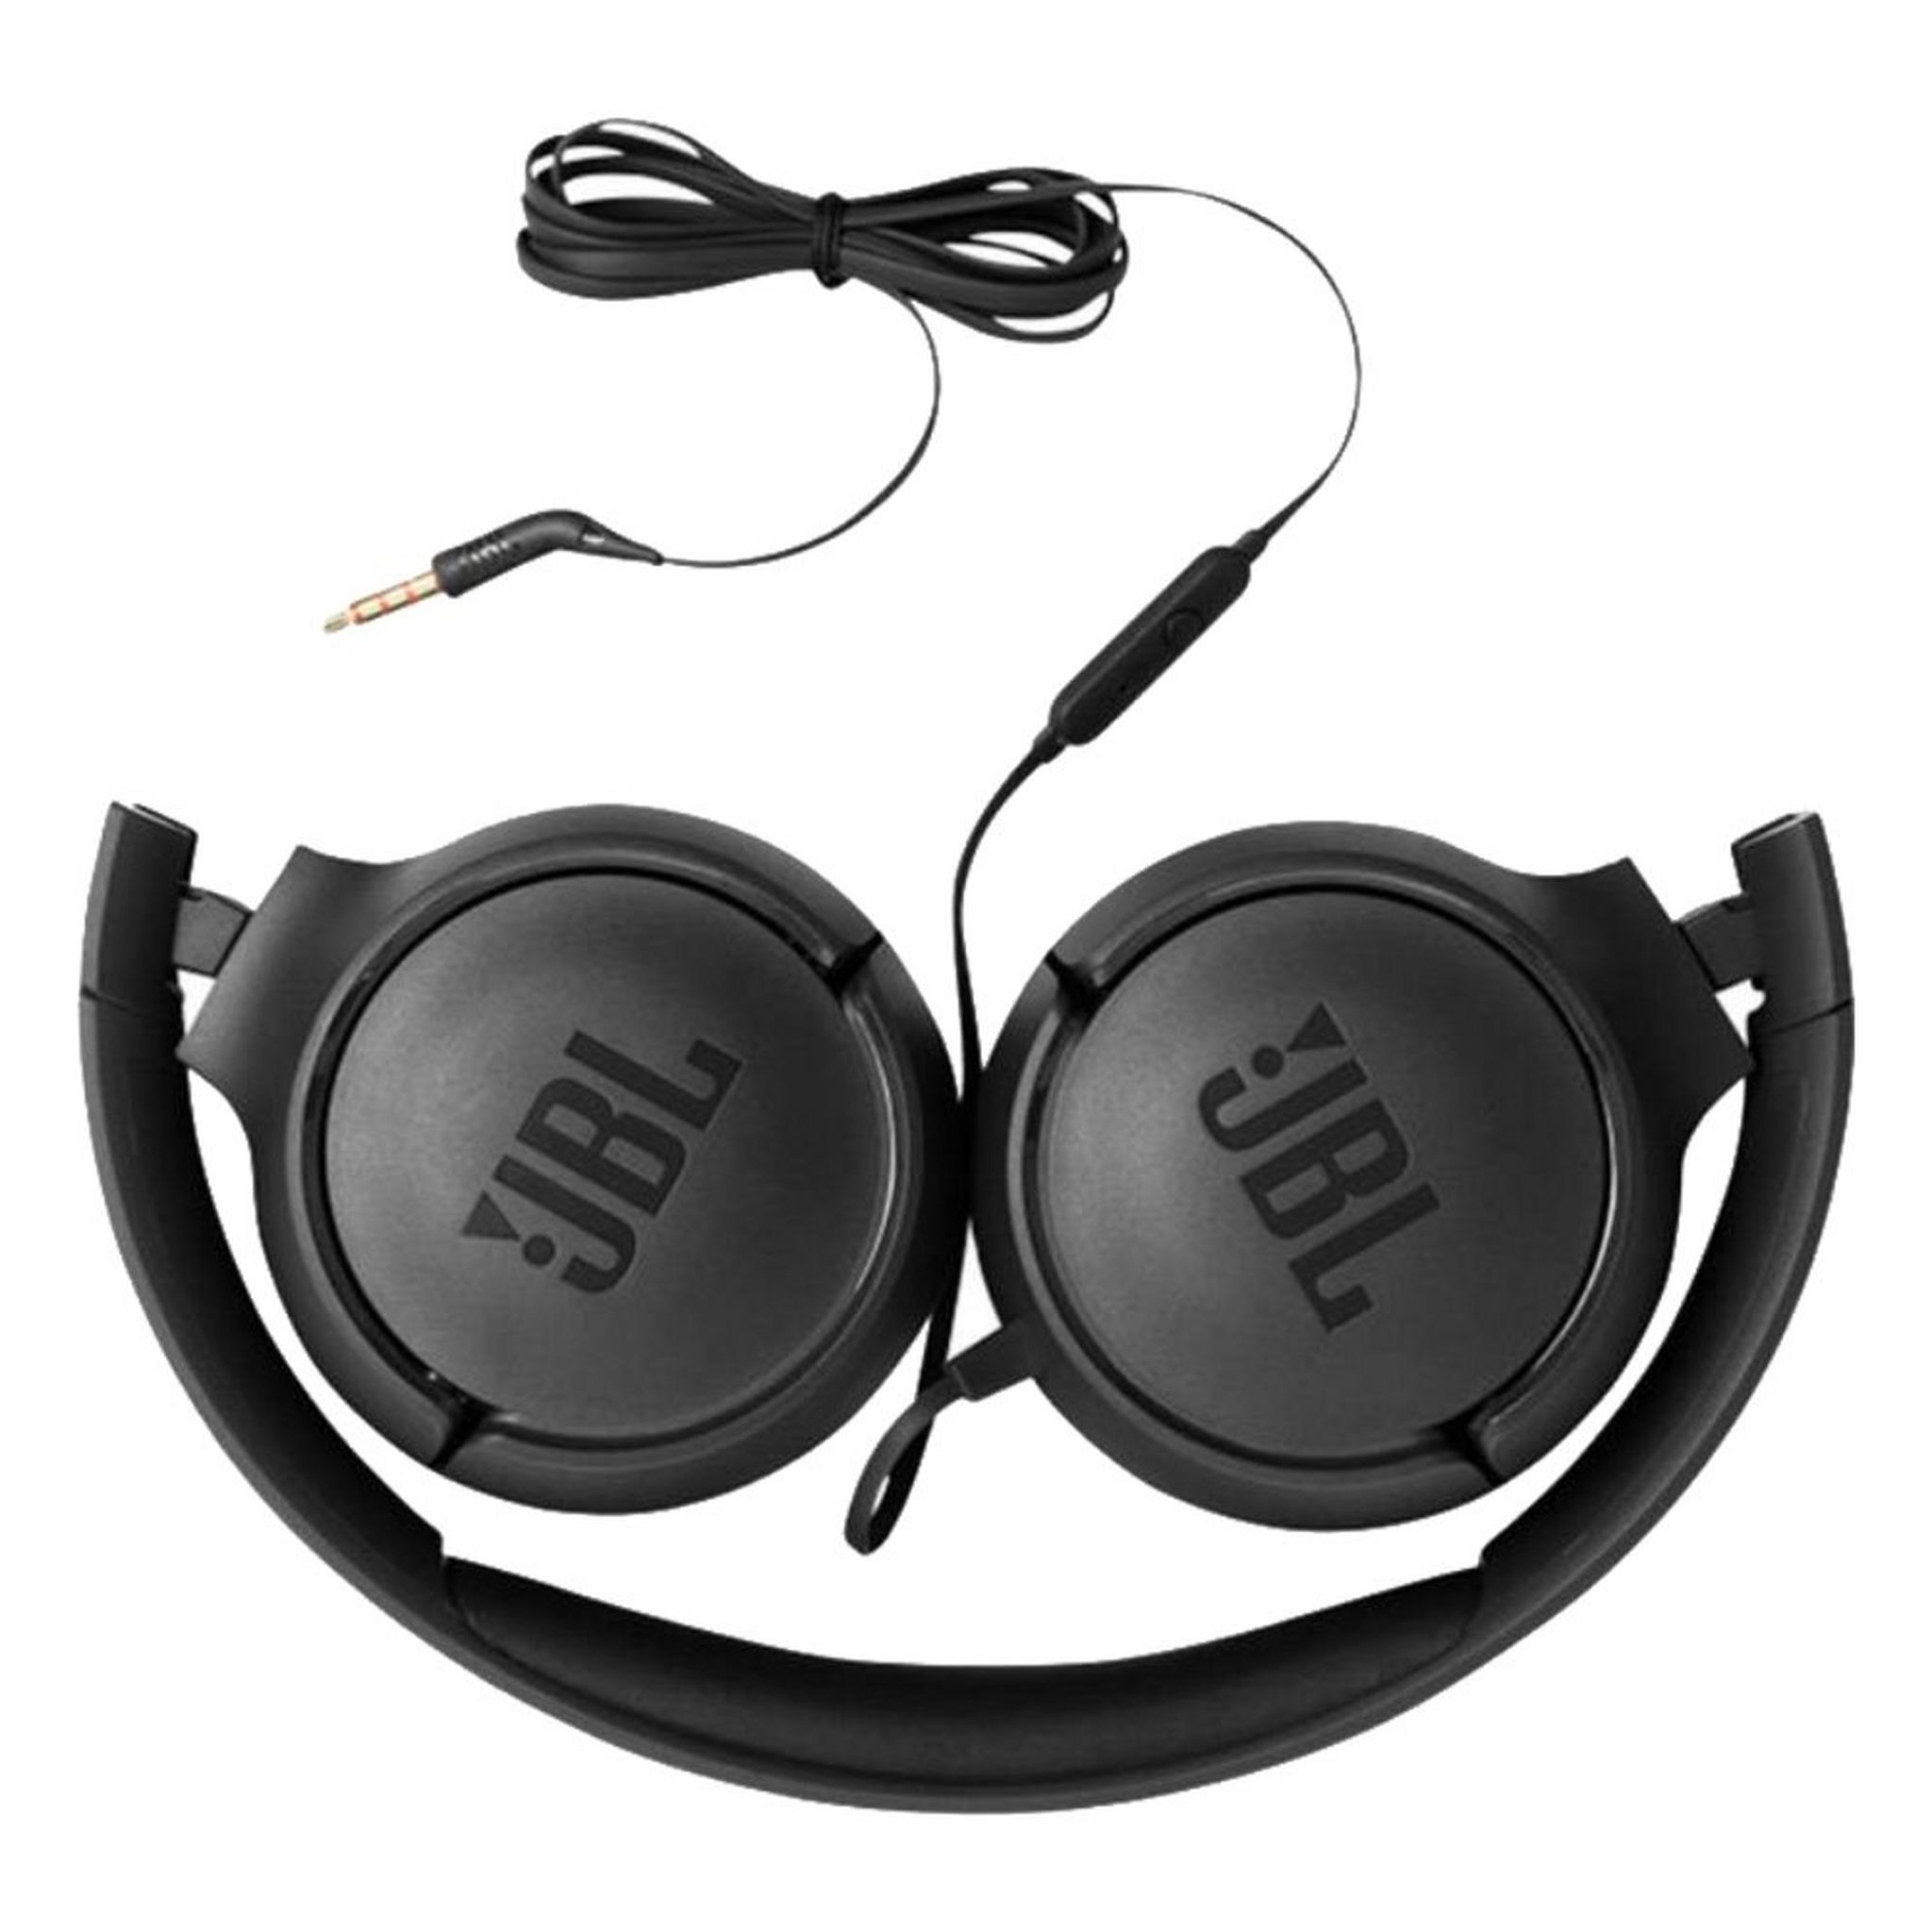 JBL Tune 500BT Wired On-Ear Headphones - Black